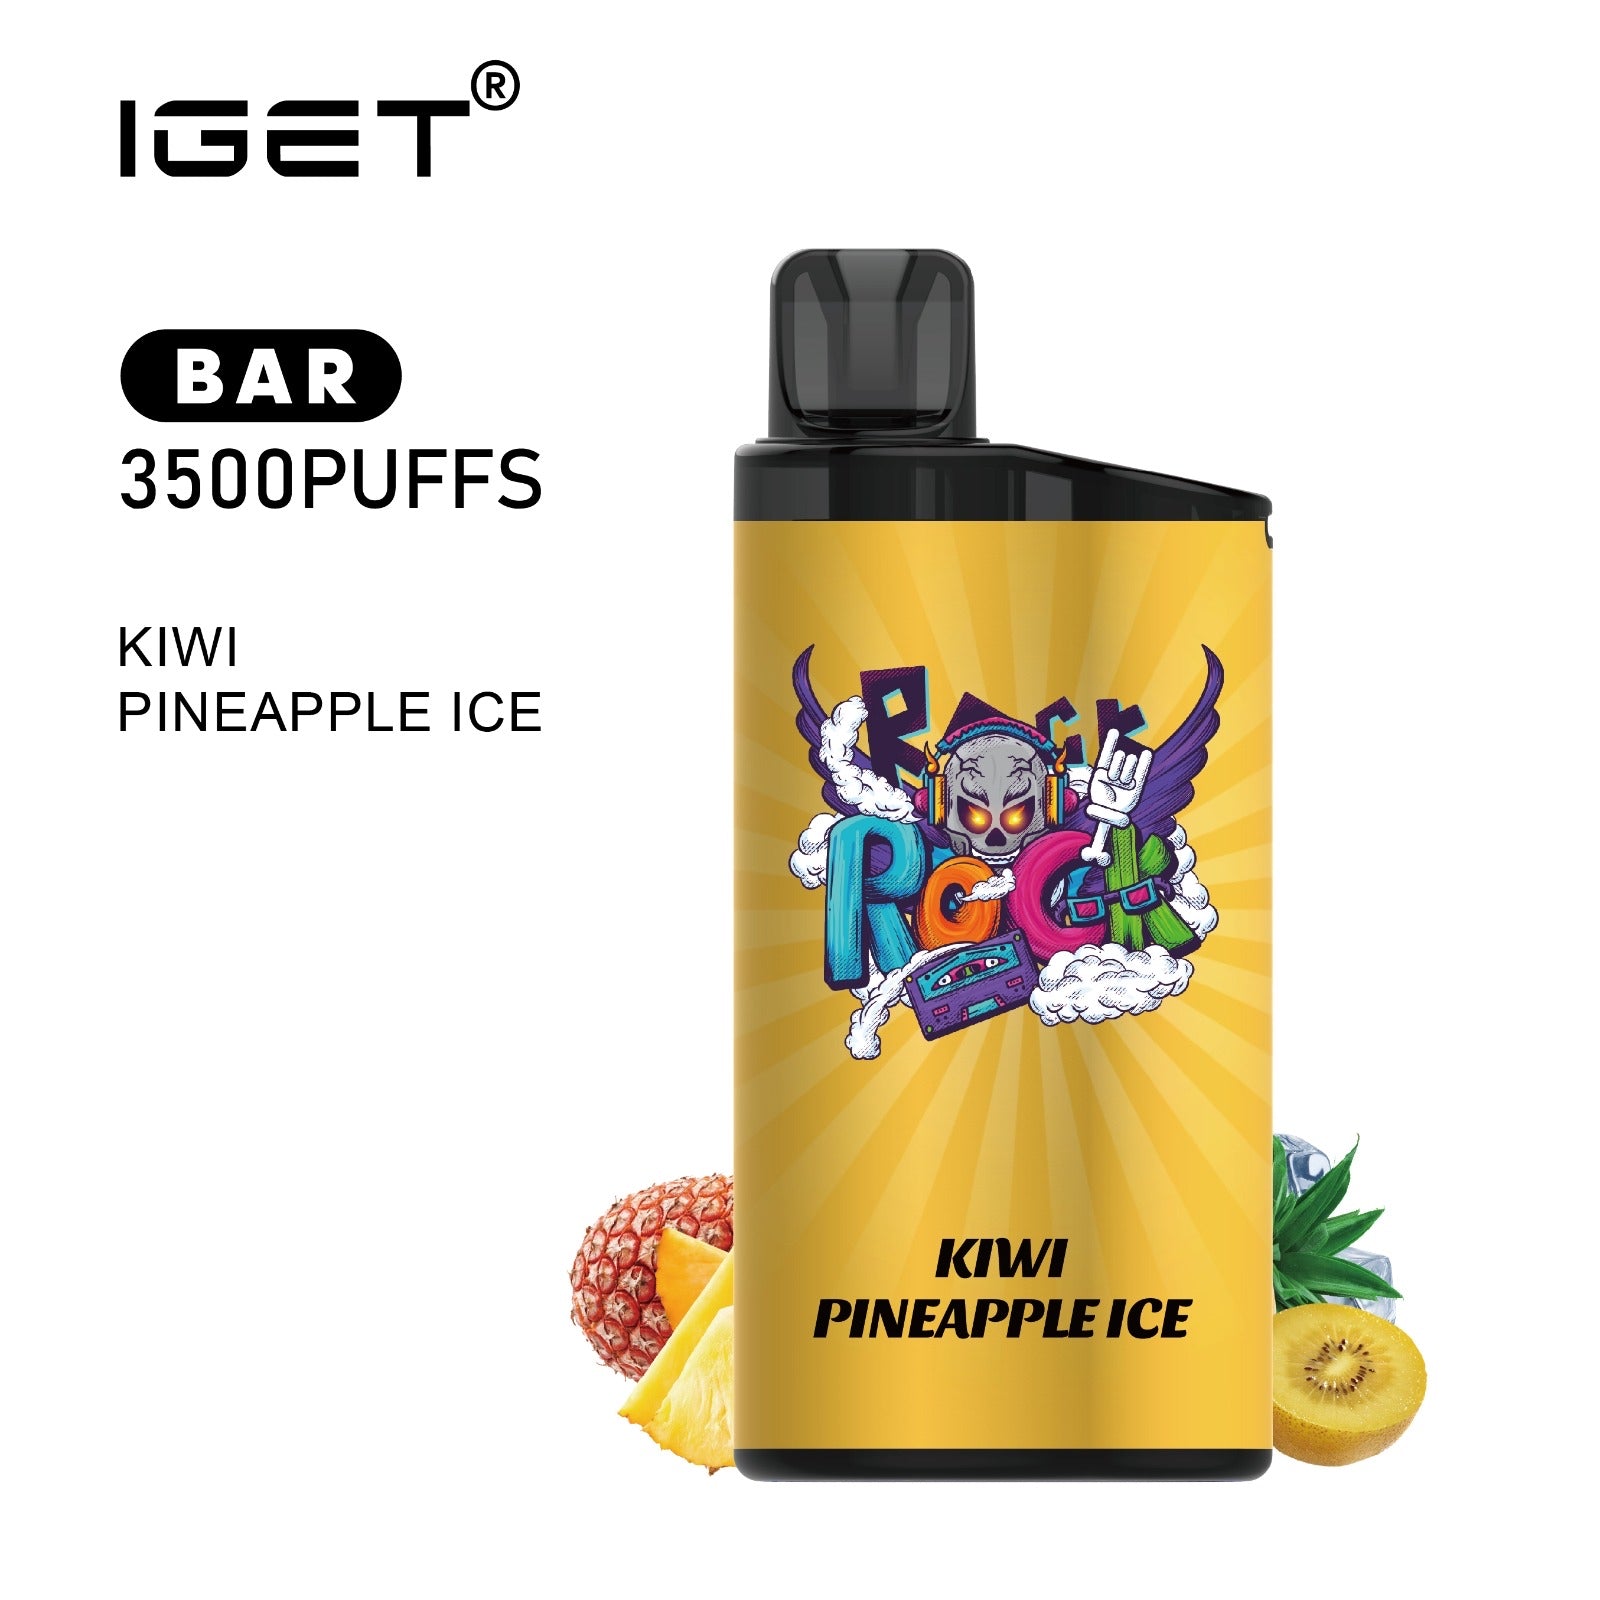 IGET BAR KIWI PINEAPPLE ICE